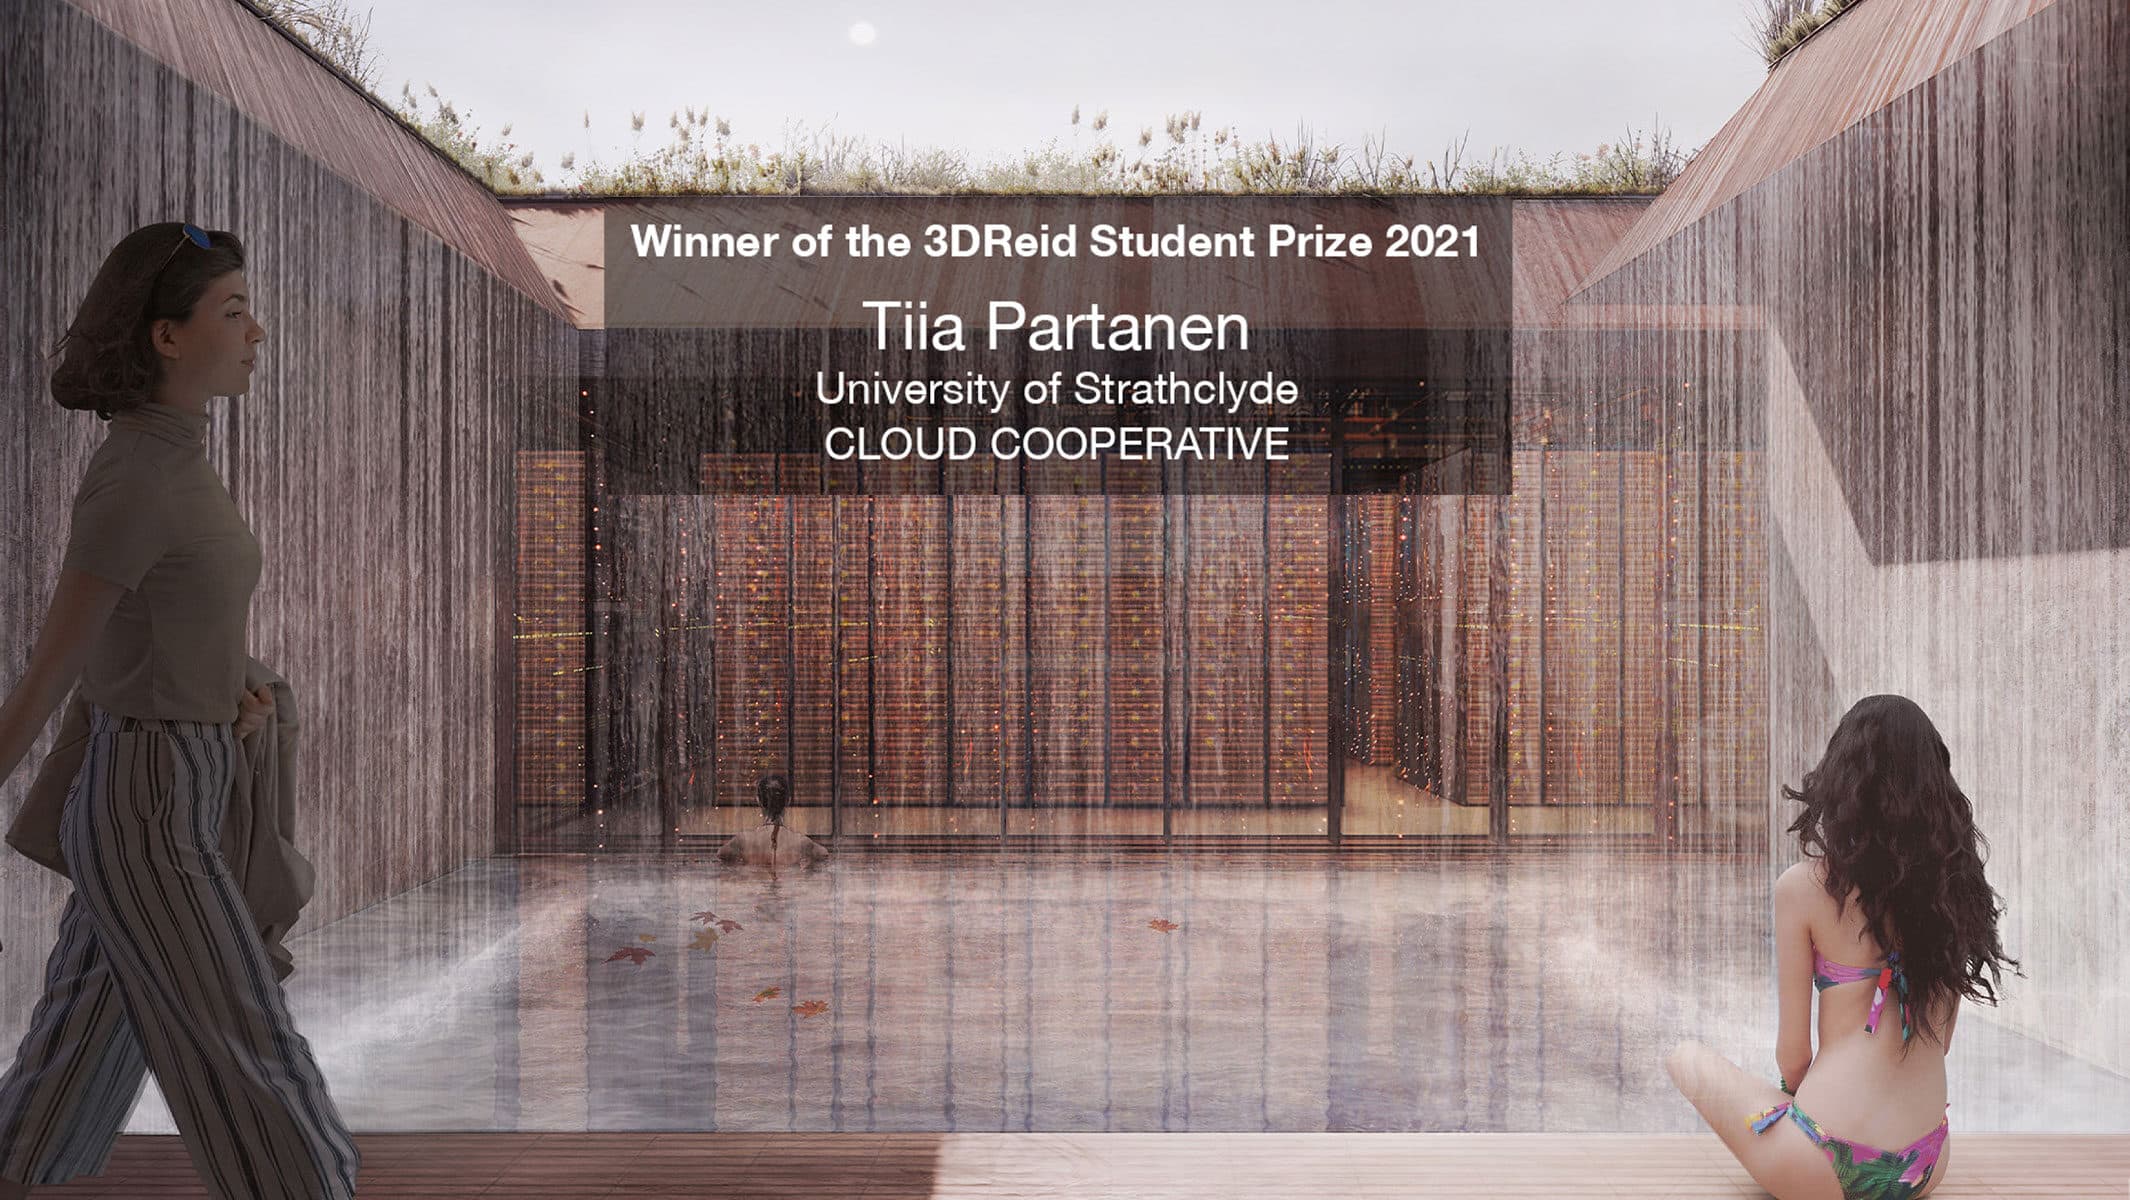 3DReid Student Prize 2021 winner announced